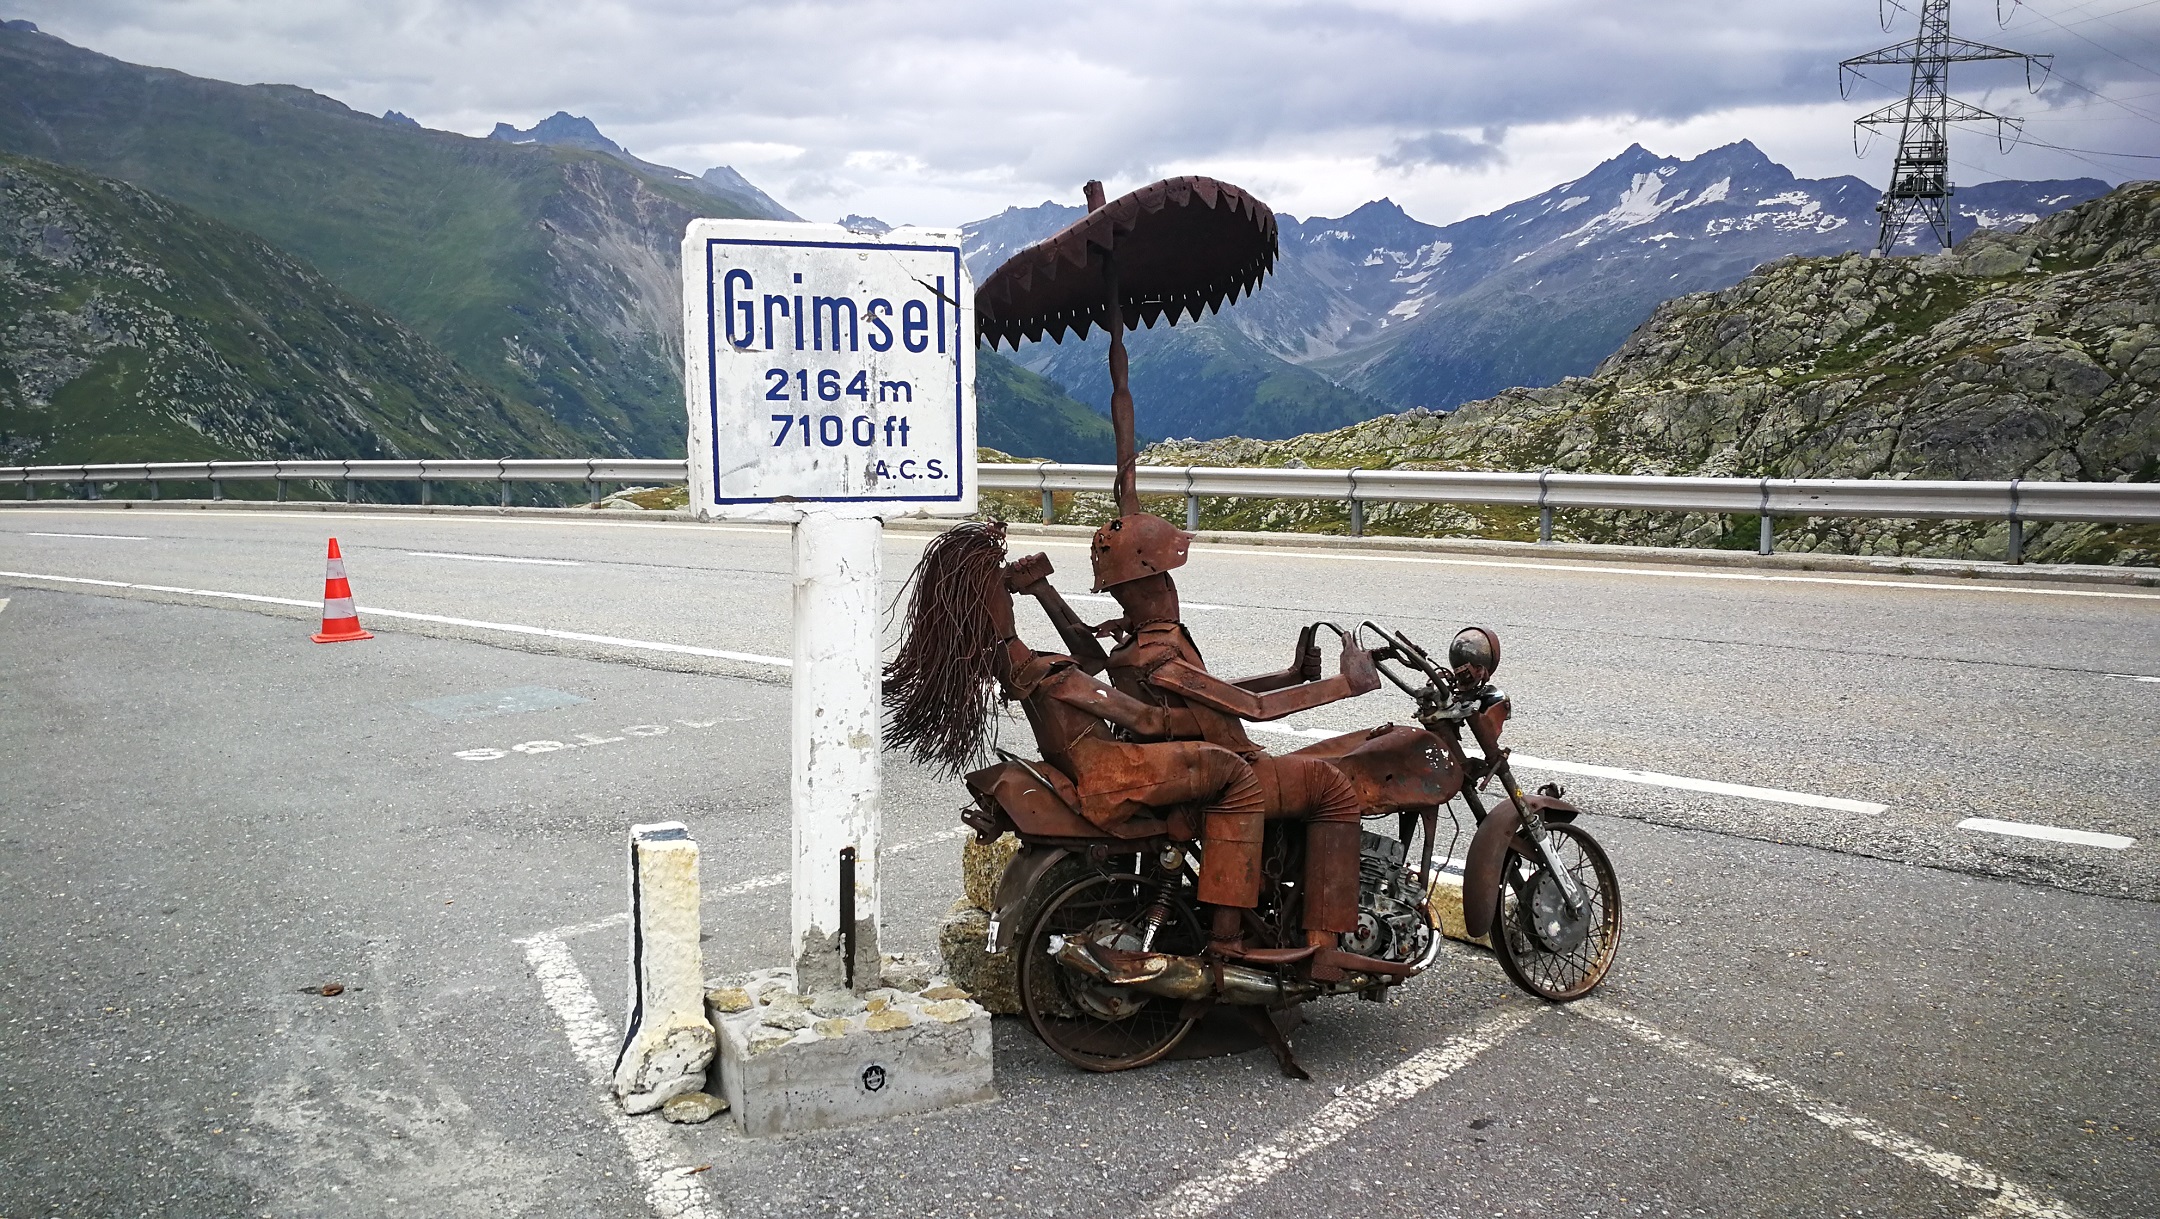 Grimsel Pass